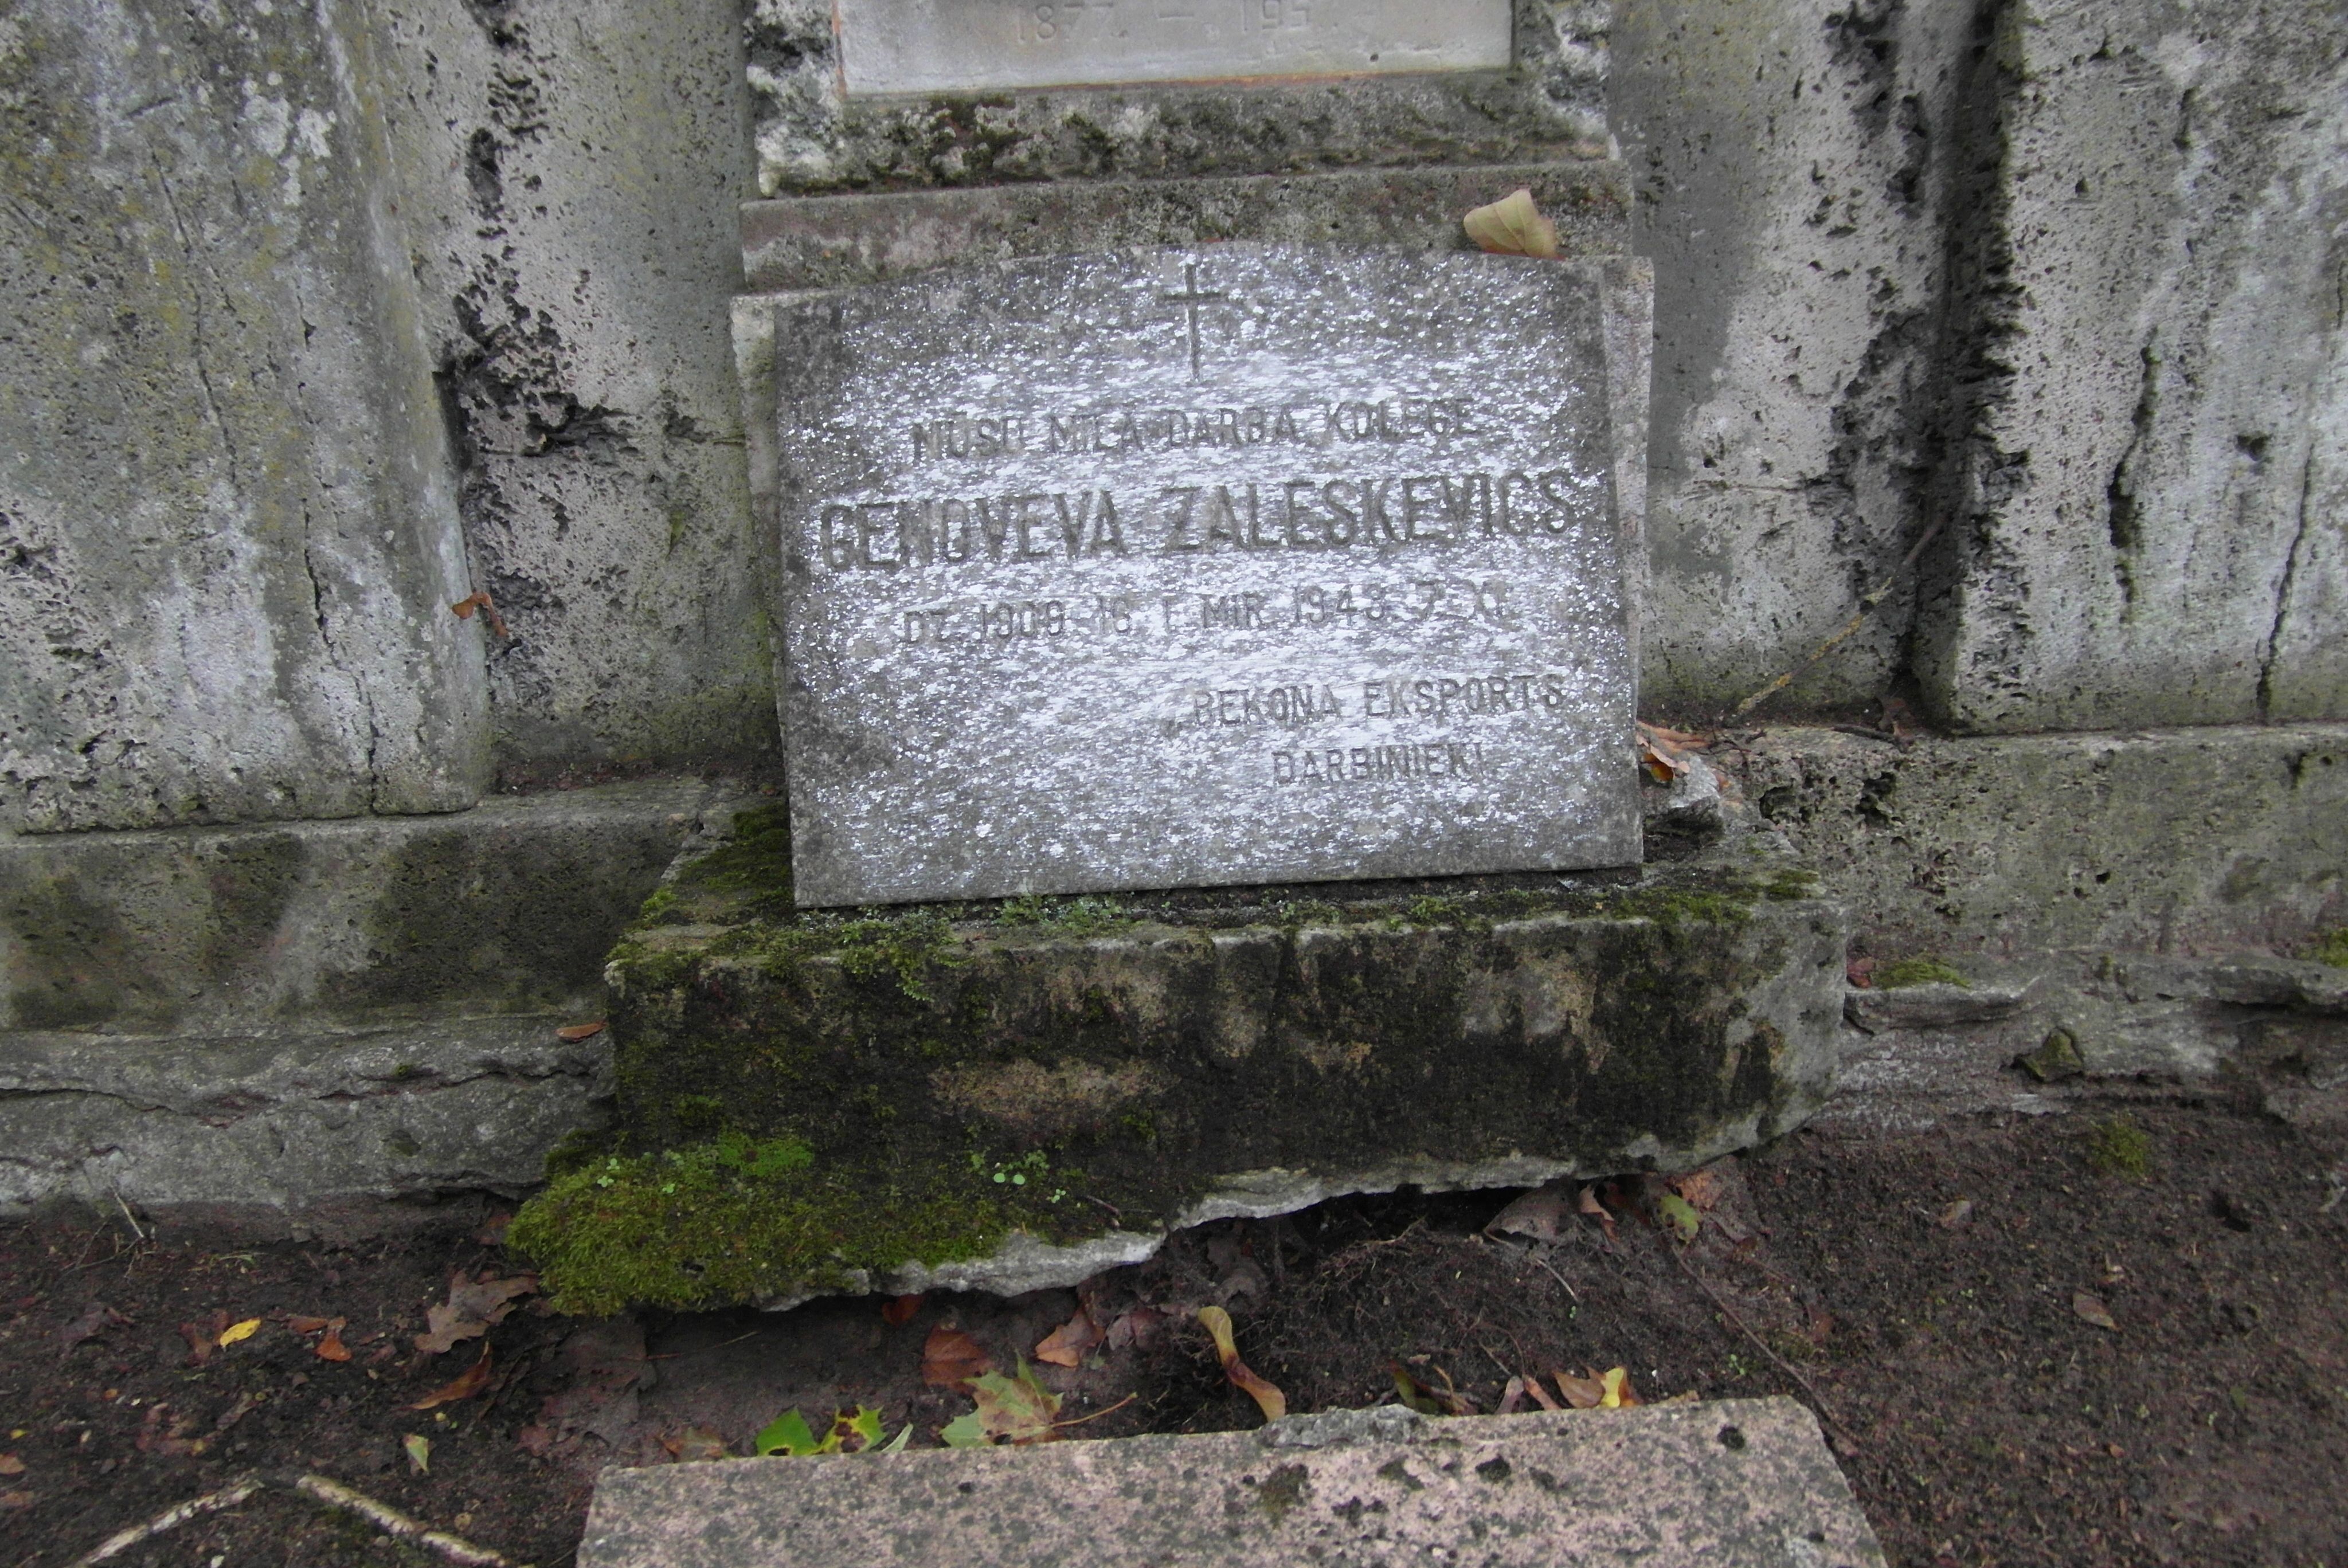 Inscription from the gravestone of Andrei Zaleskevich, Rozalia Zaleskevich, Genoveva Zaleskievics, St Michael's cemetery in Riga, as of 2021.